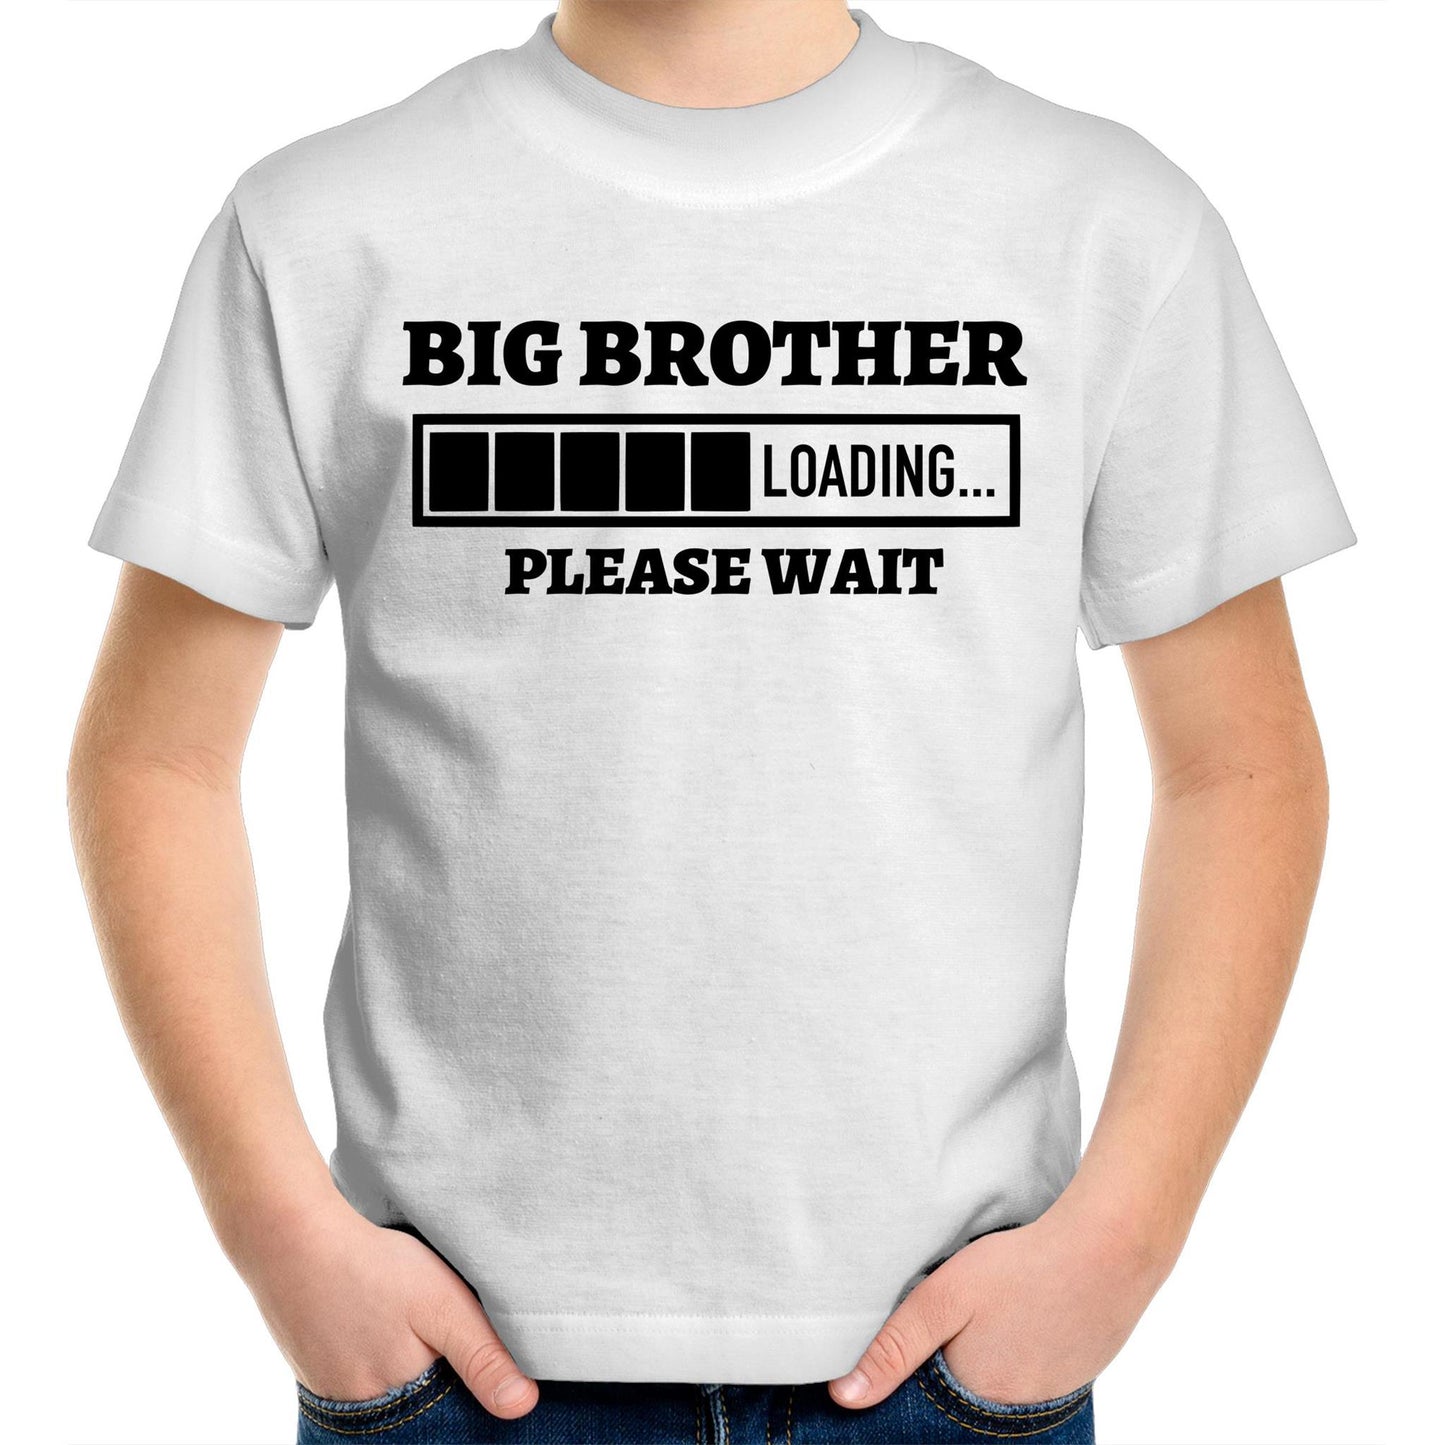 Big Brother Loading t shirt